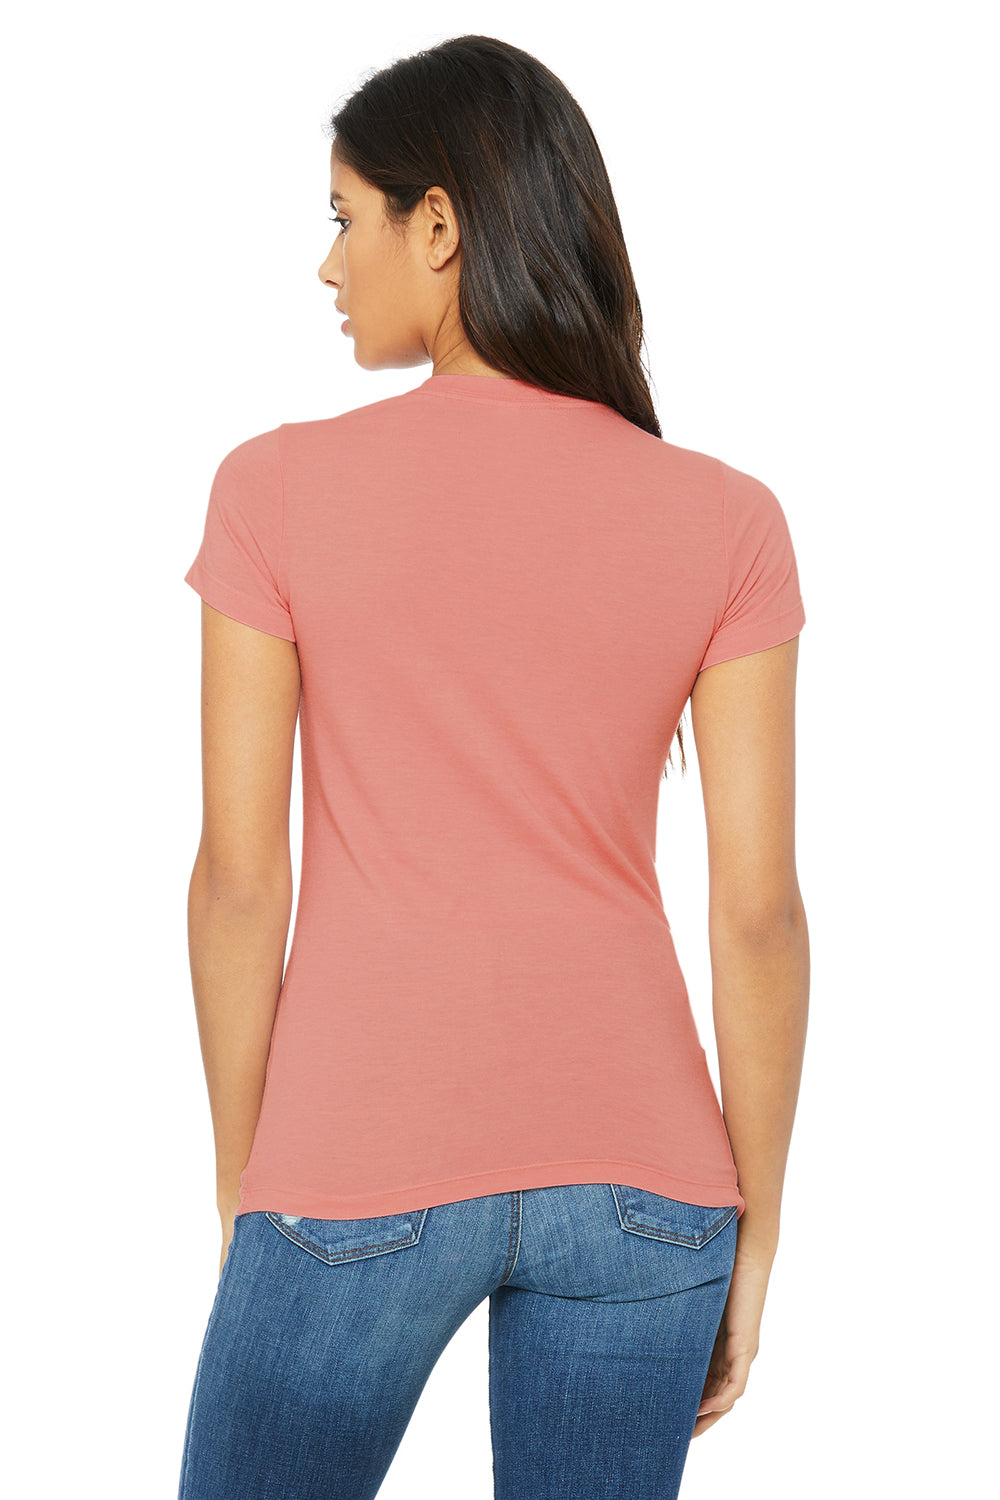 Bella + Canvas 6004 Womens The Favorite Short Sleeve Crewneck T-Shirt Heather Pink Back